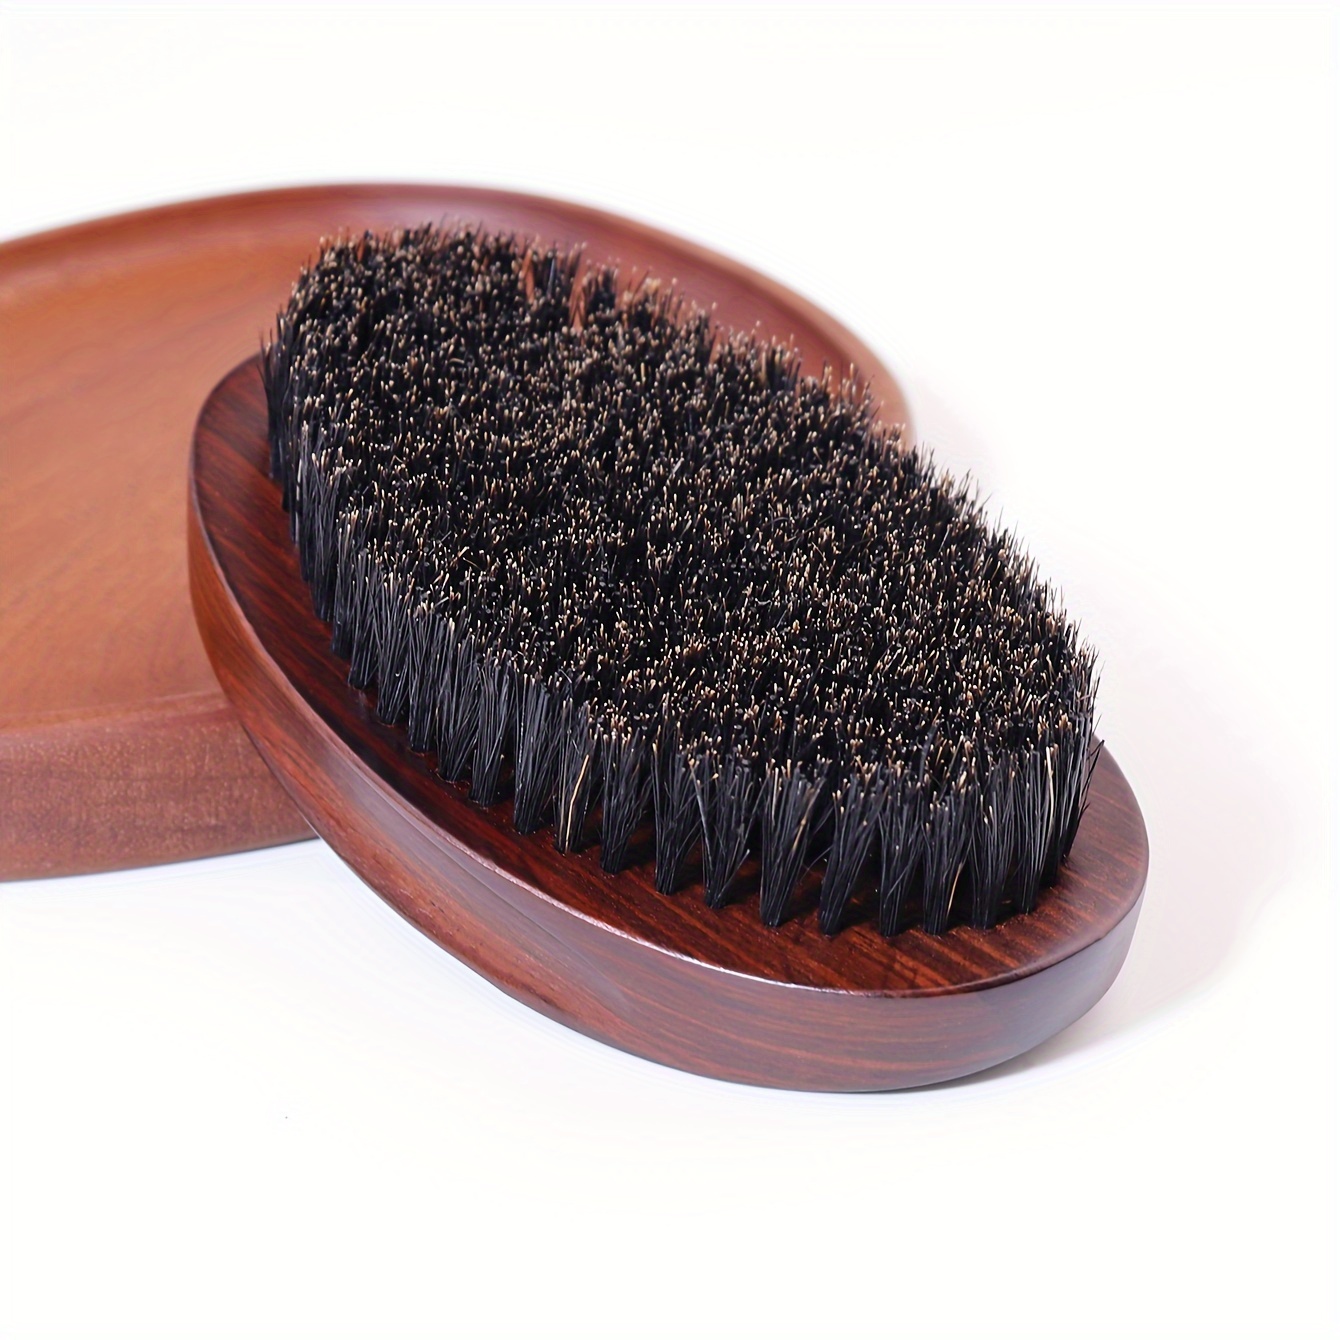 

Mane Bristle Hair Brush For Normal Hair - 1pc, Vintage Curved Wave Design, Wooden Anti-static Hair Detangling Brush